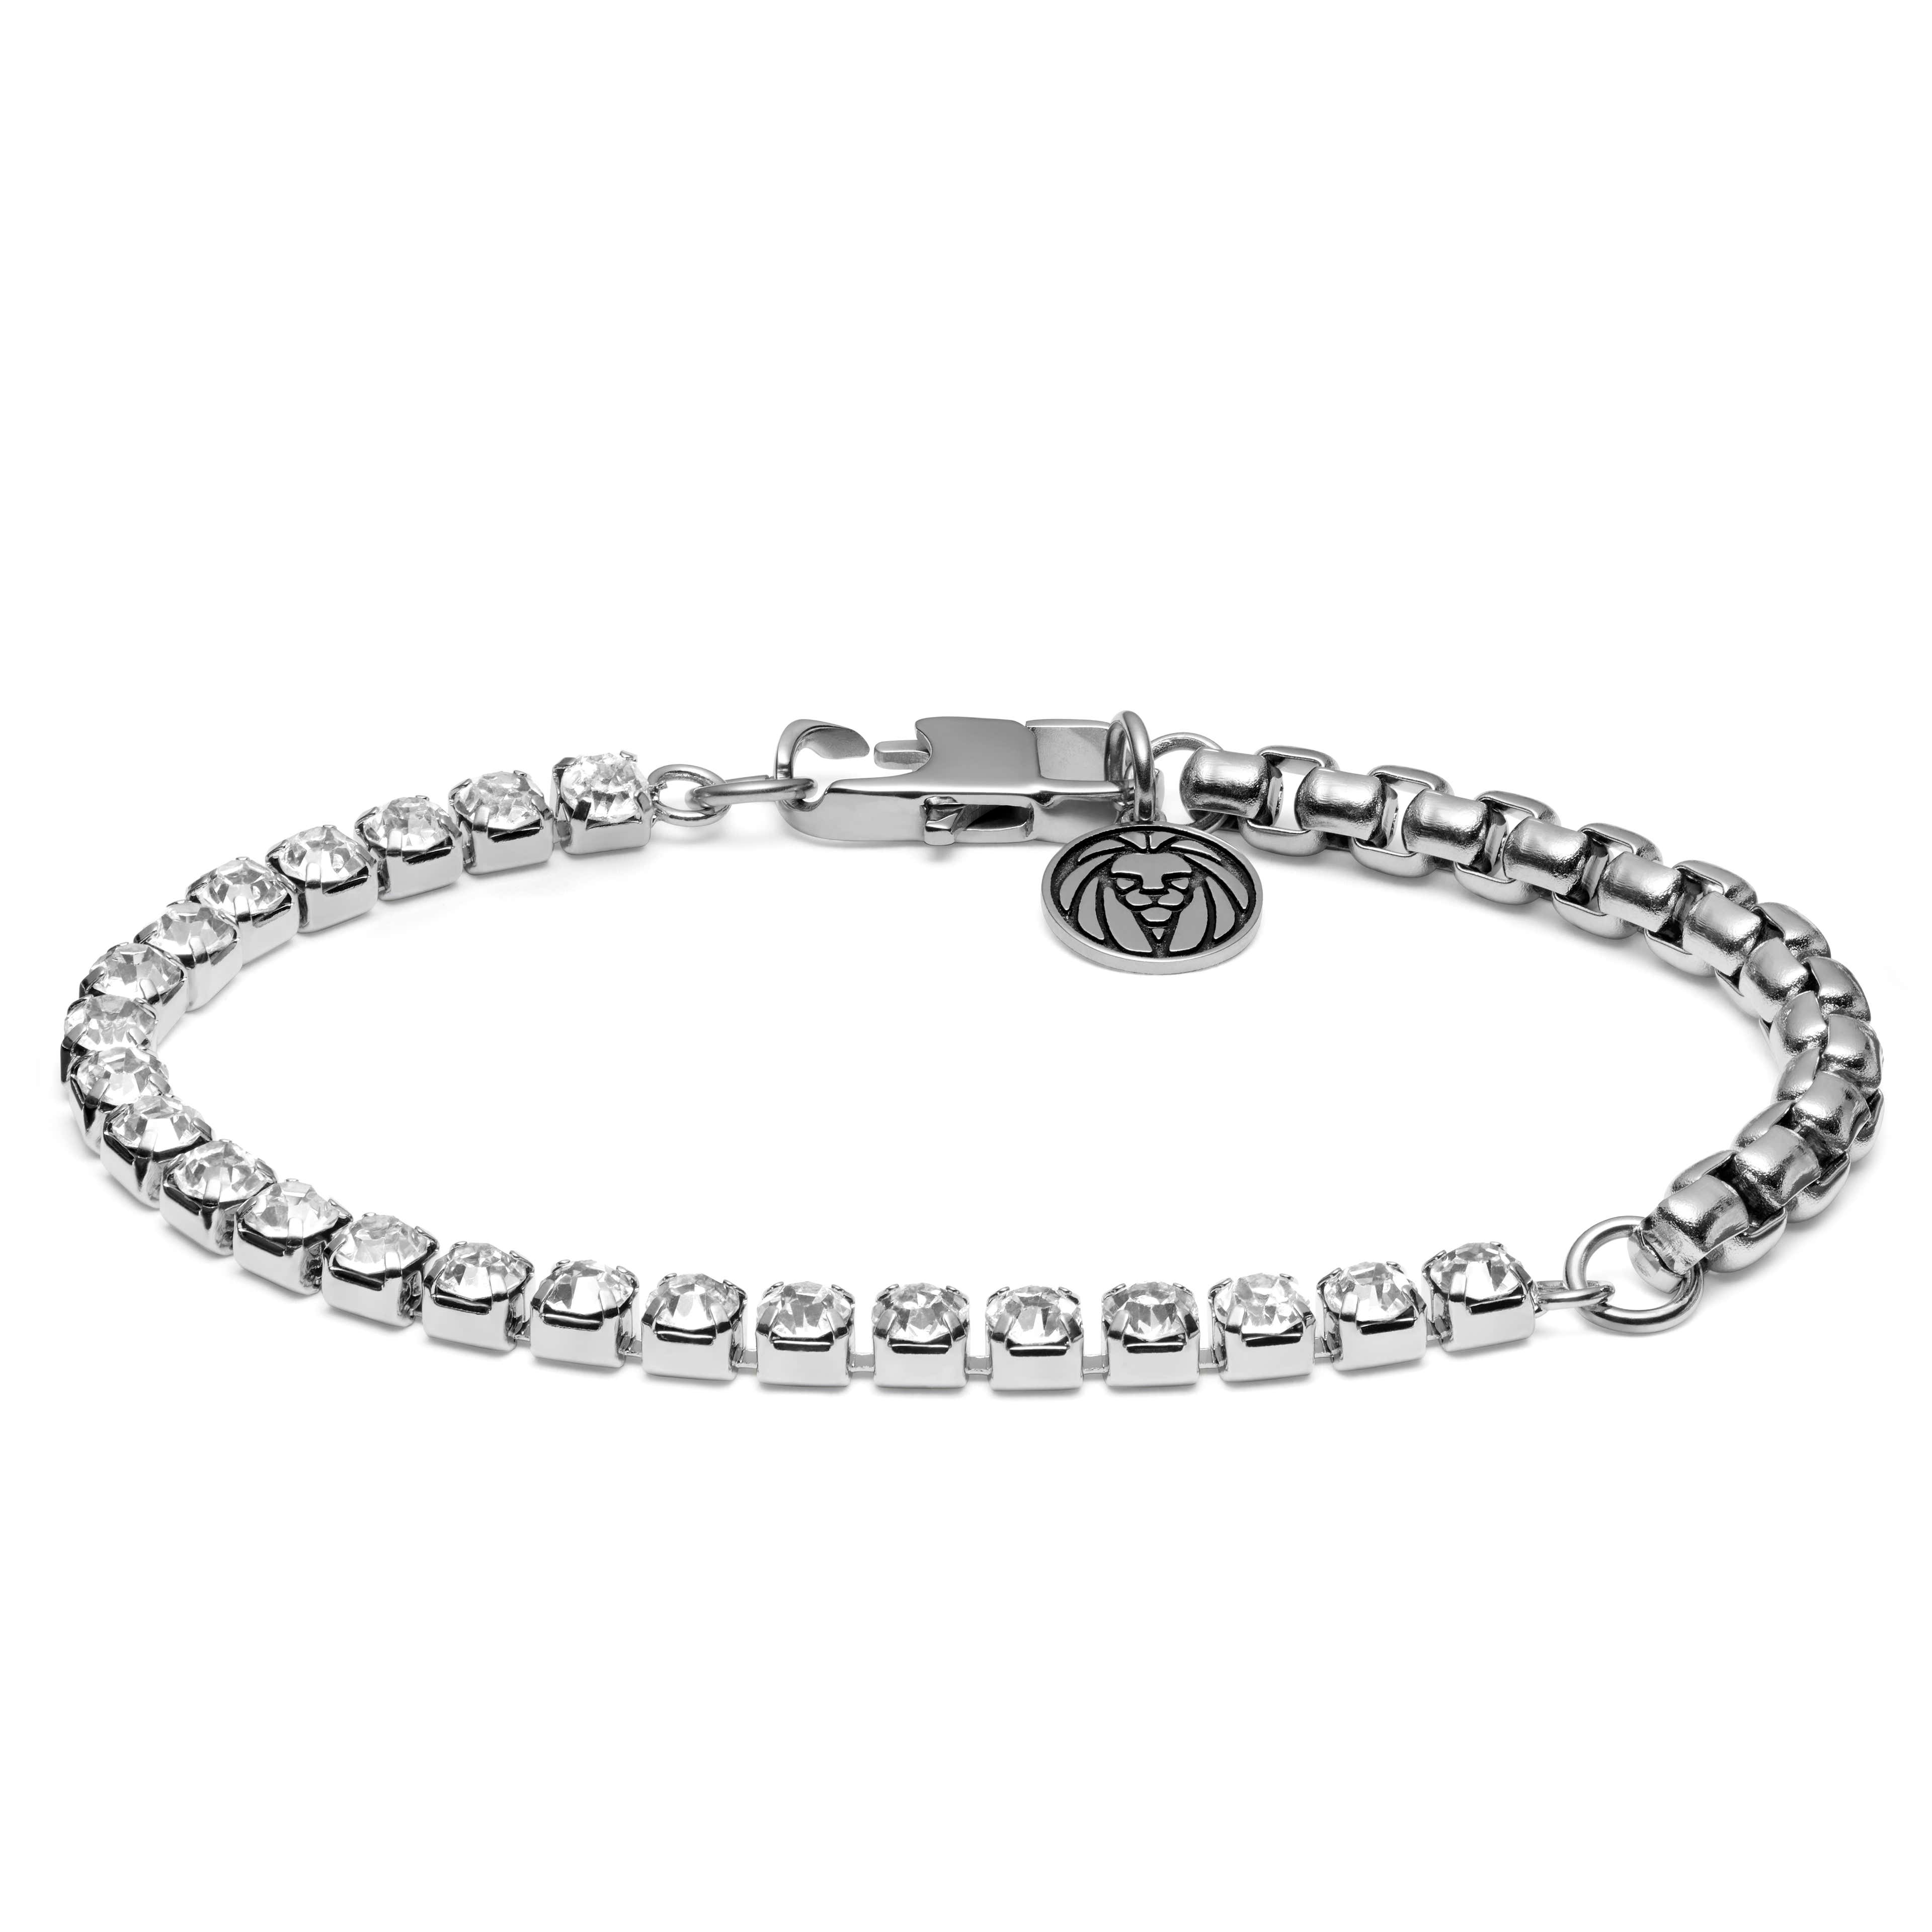 Craig Amager Silver-Tone Box Chain Bracelet with Glass Diamonds